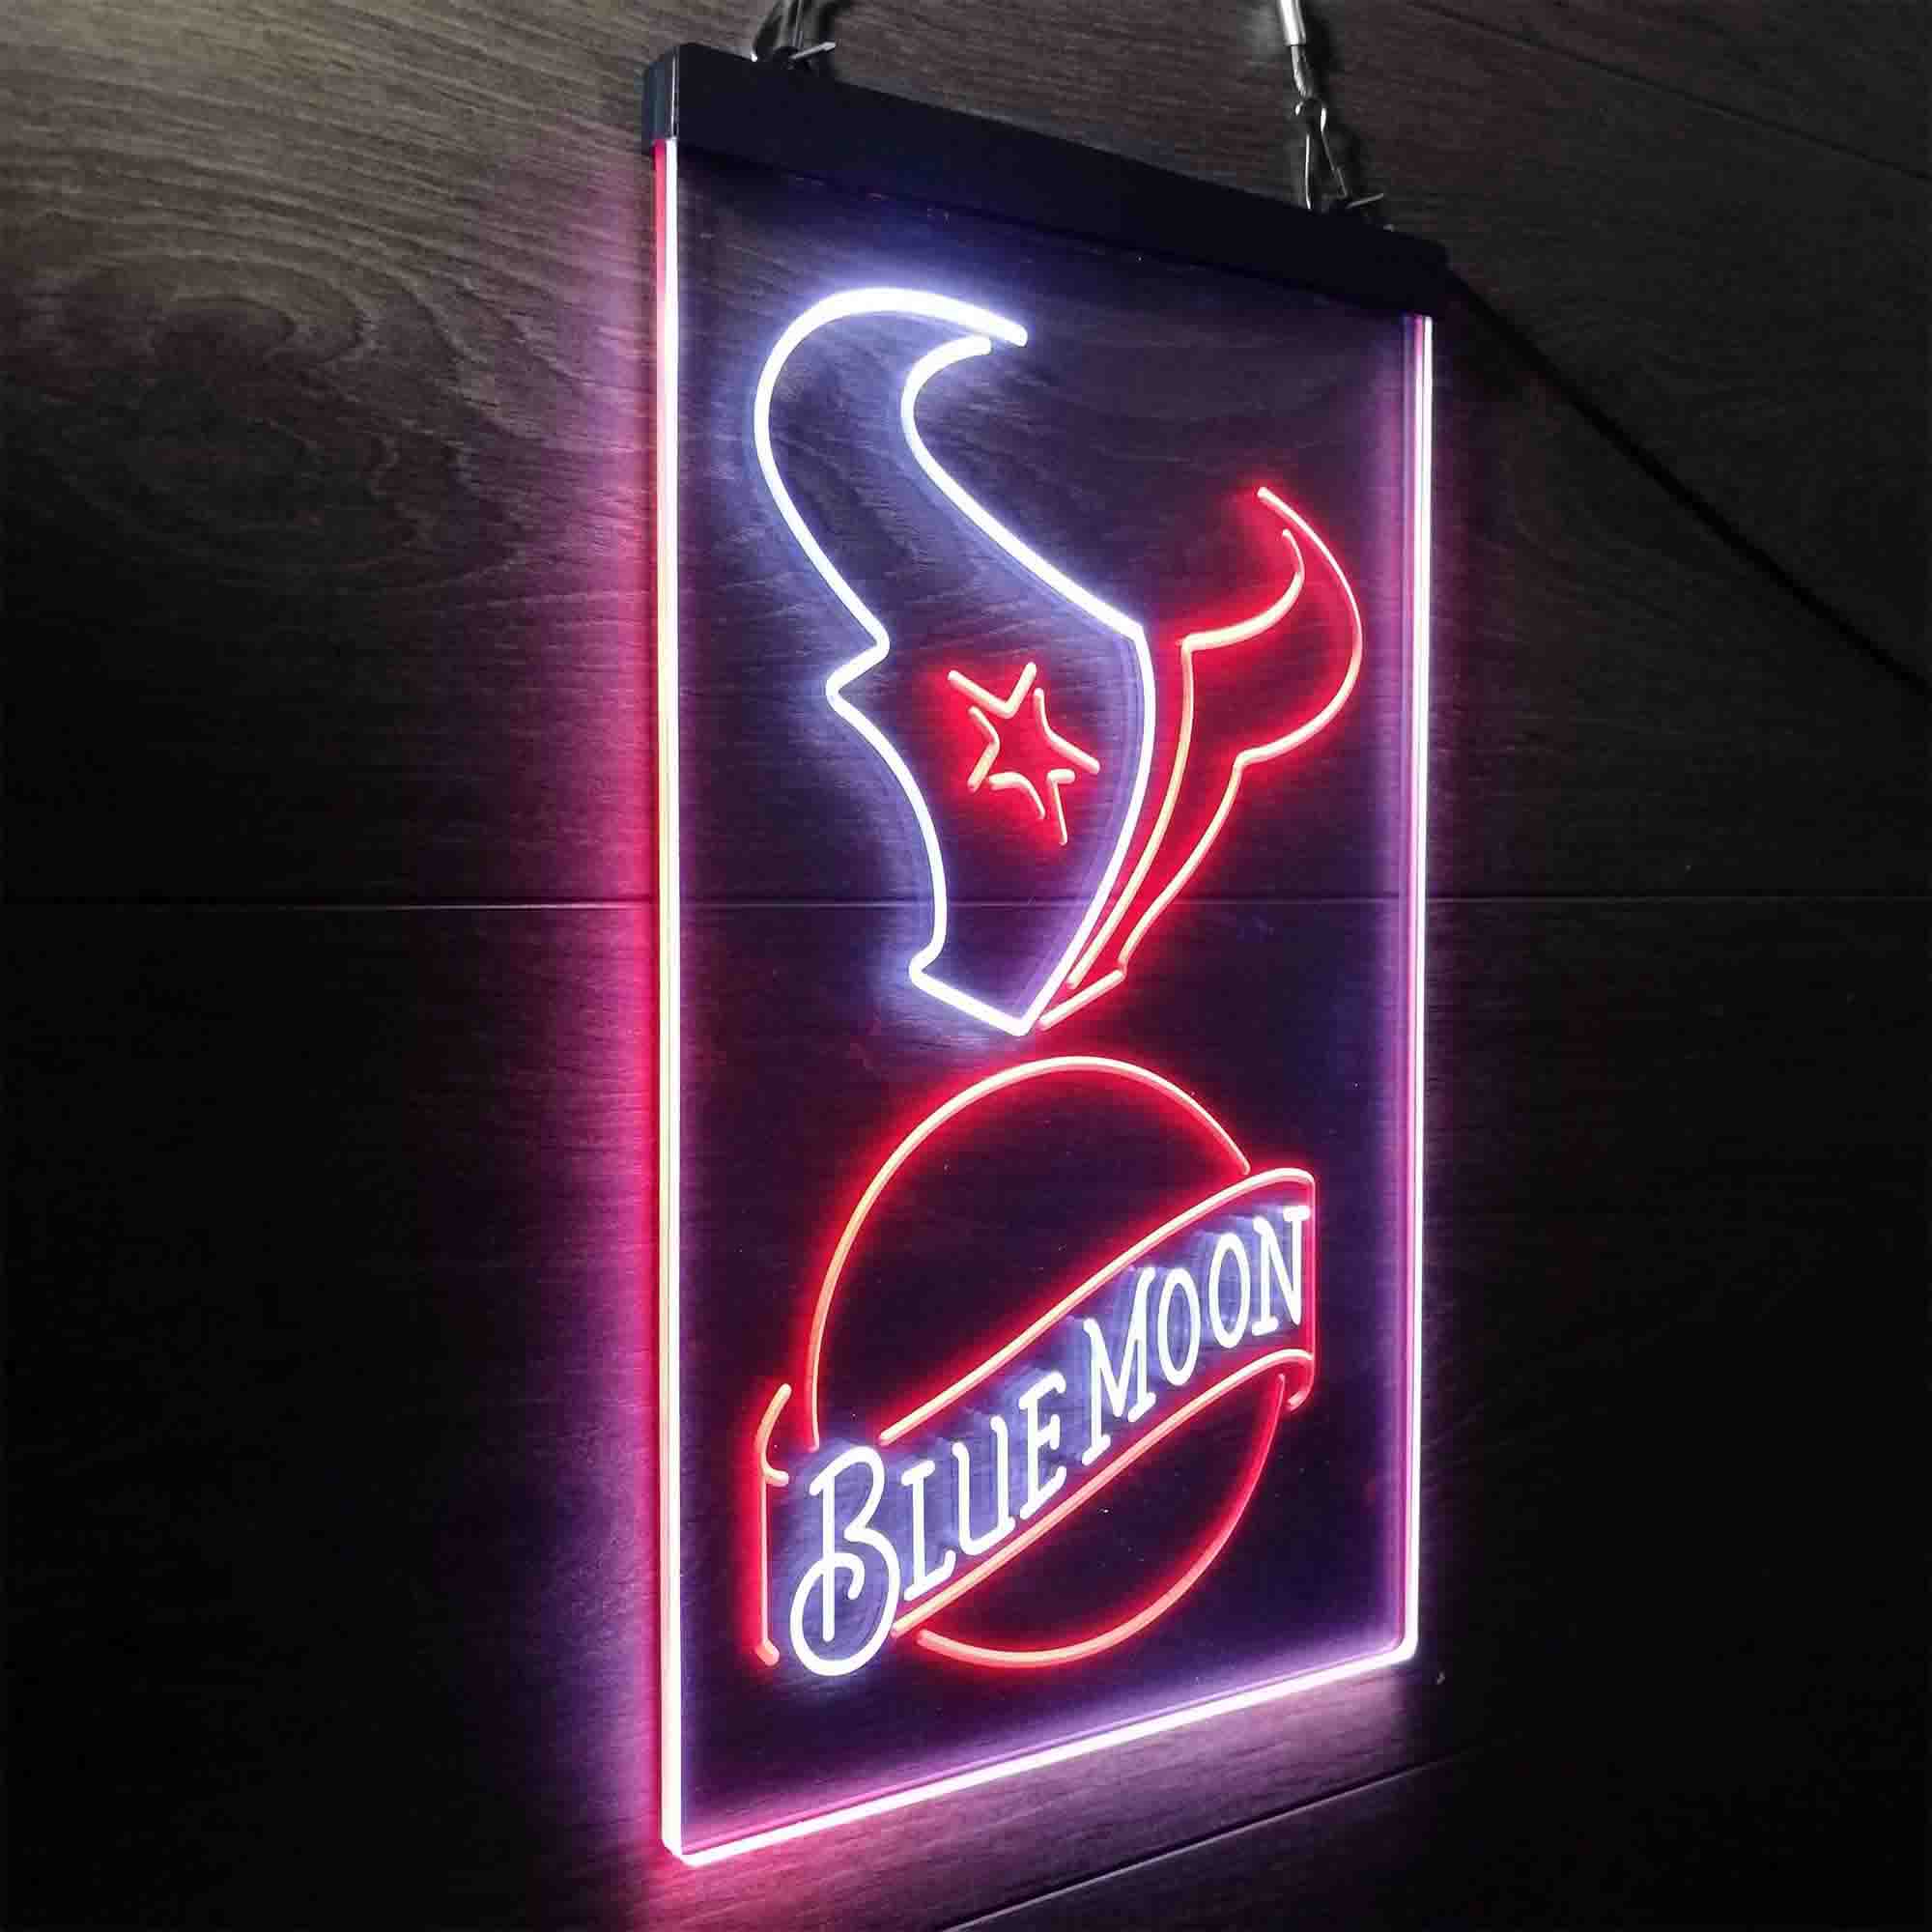 Blue Moon Bar Houston Texans Est. 2002 LED Neon Sign